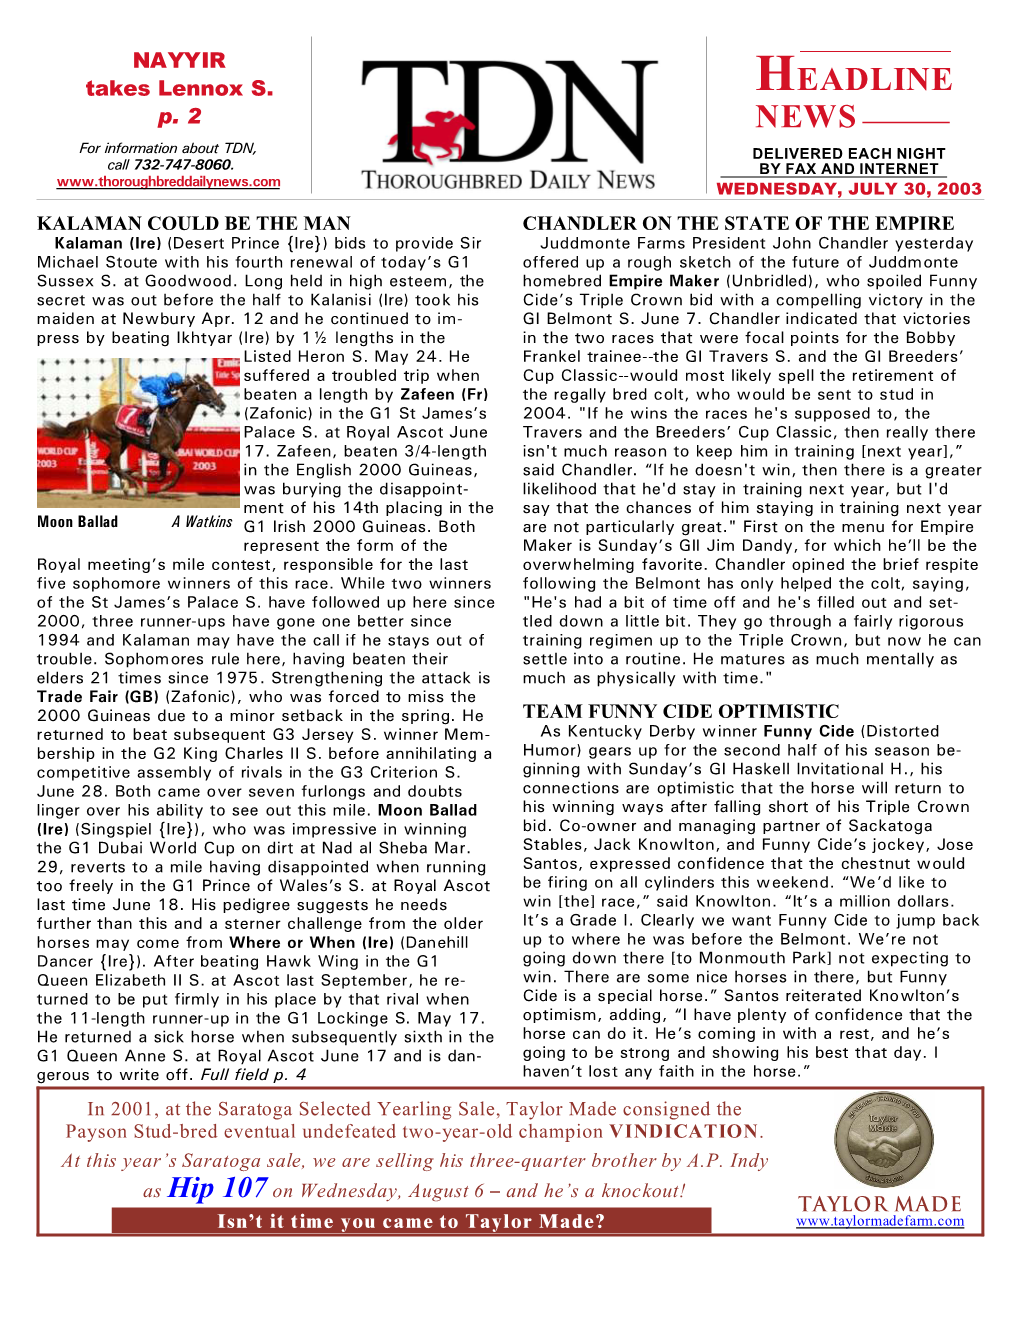 HEADLINE NEWS • 7/30/03 • PAGE 2 of 7